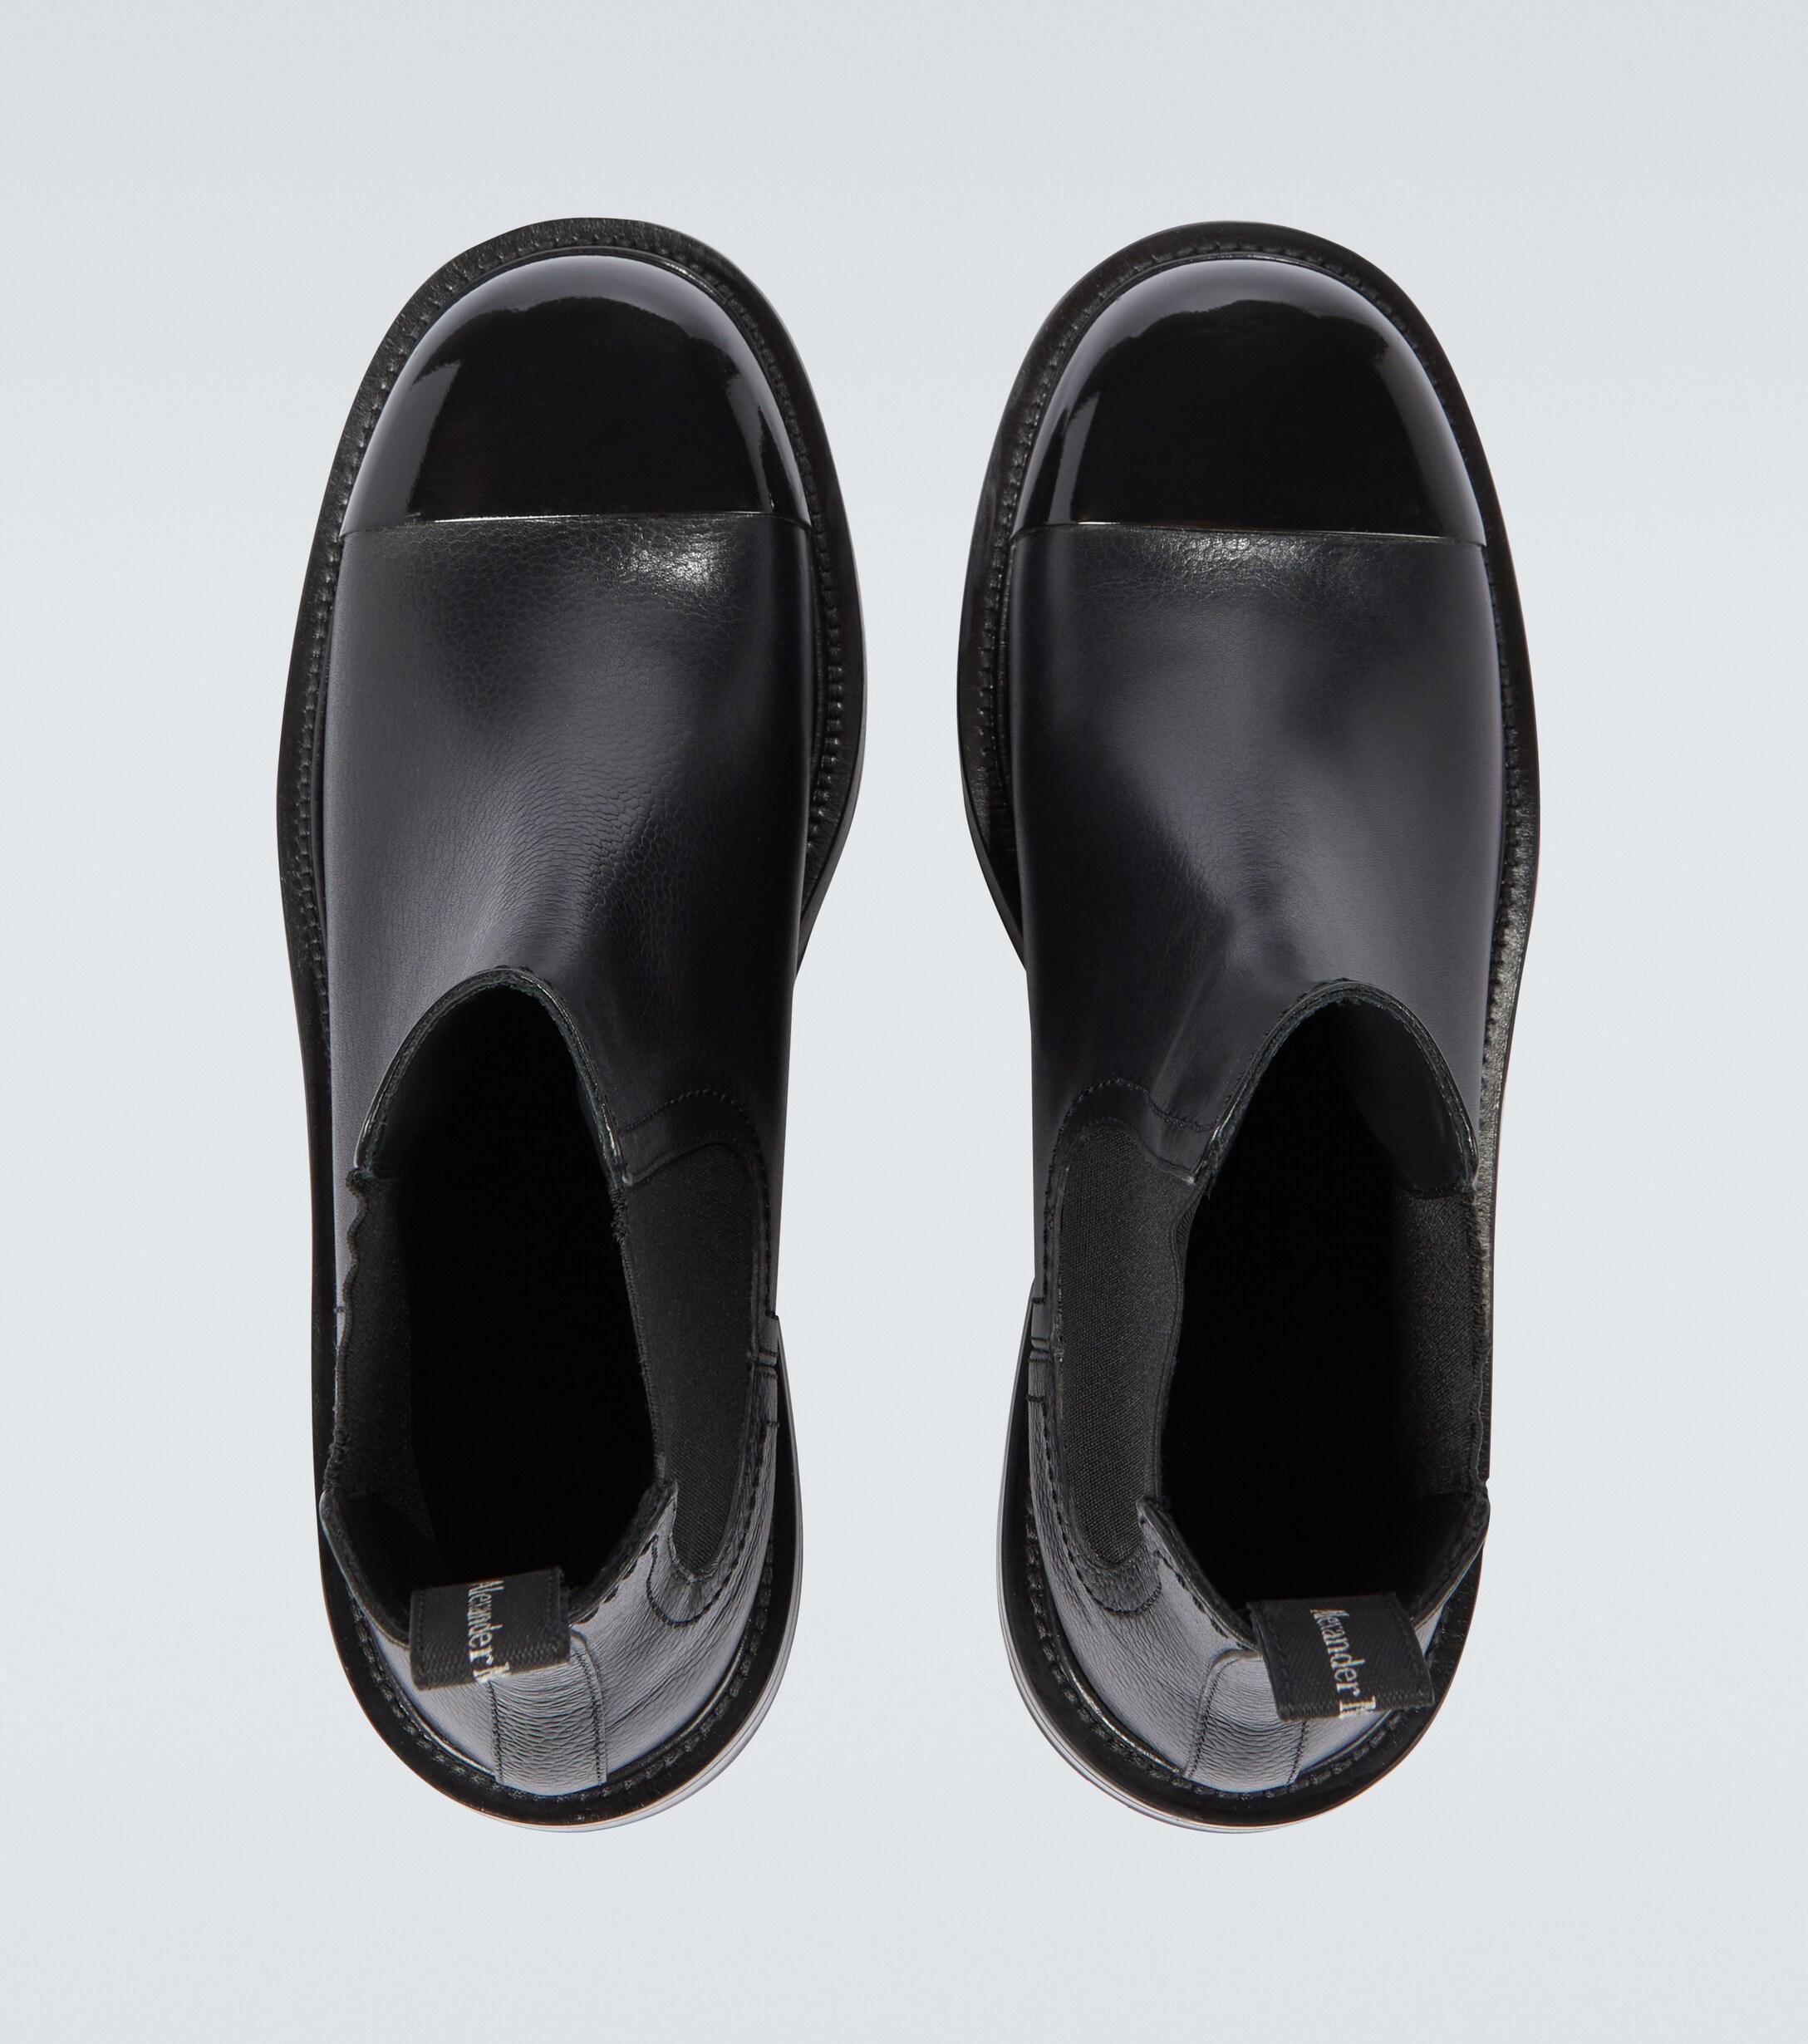 Alexander McQueen Leather Chelsea Boots in Black for Men - Lyst